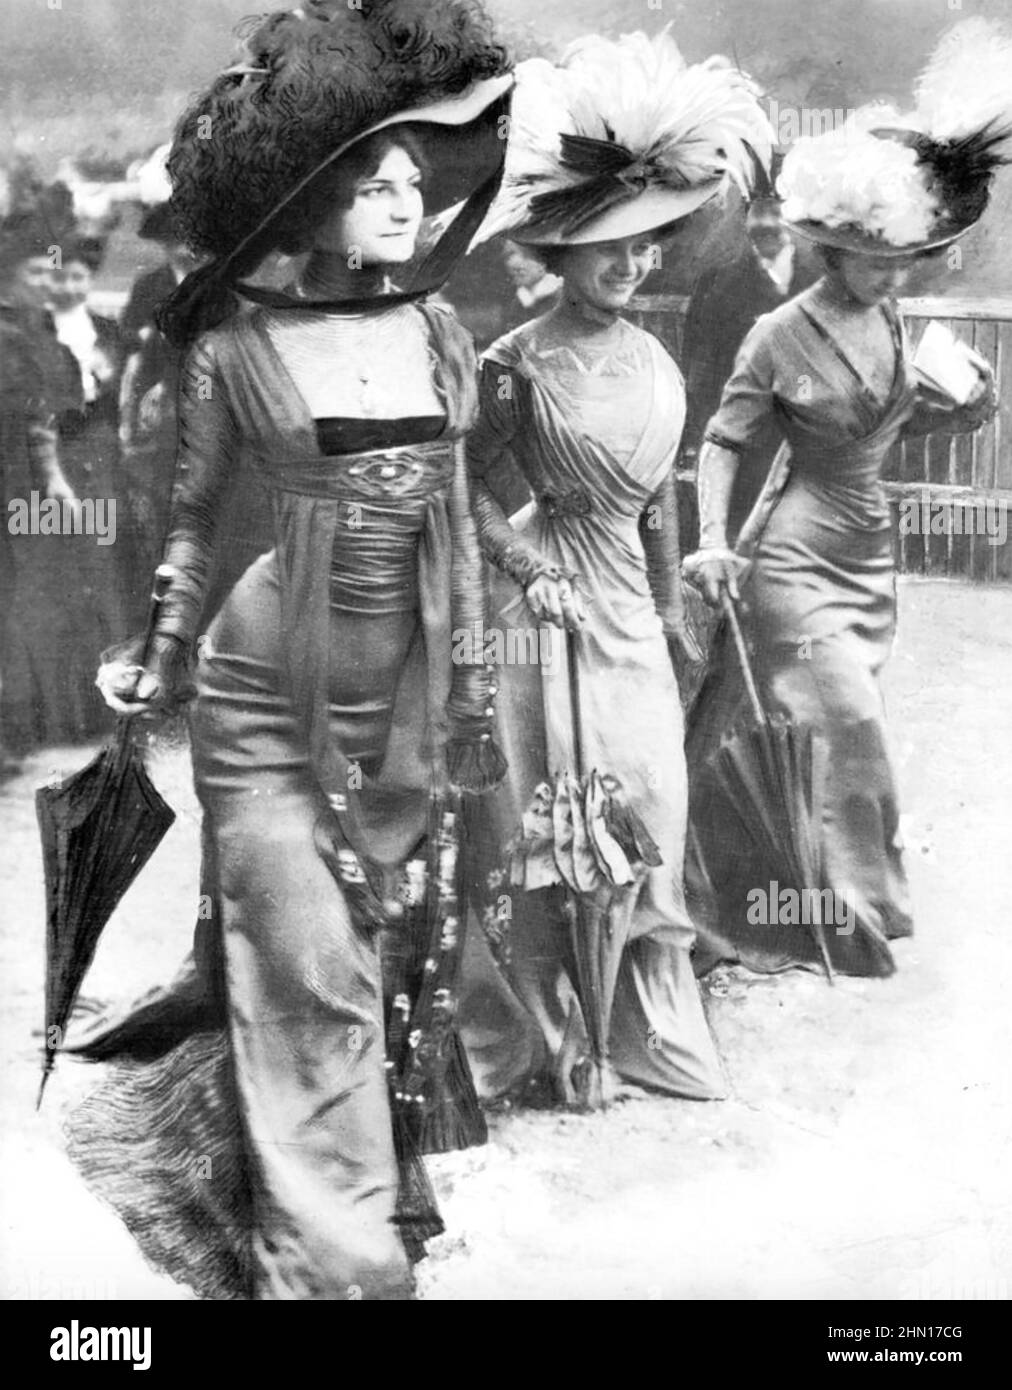 EDWARDIAN LADIES FASHIONS about 1910 Stock Photo